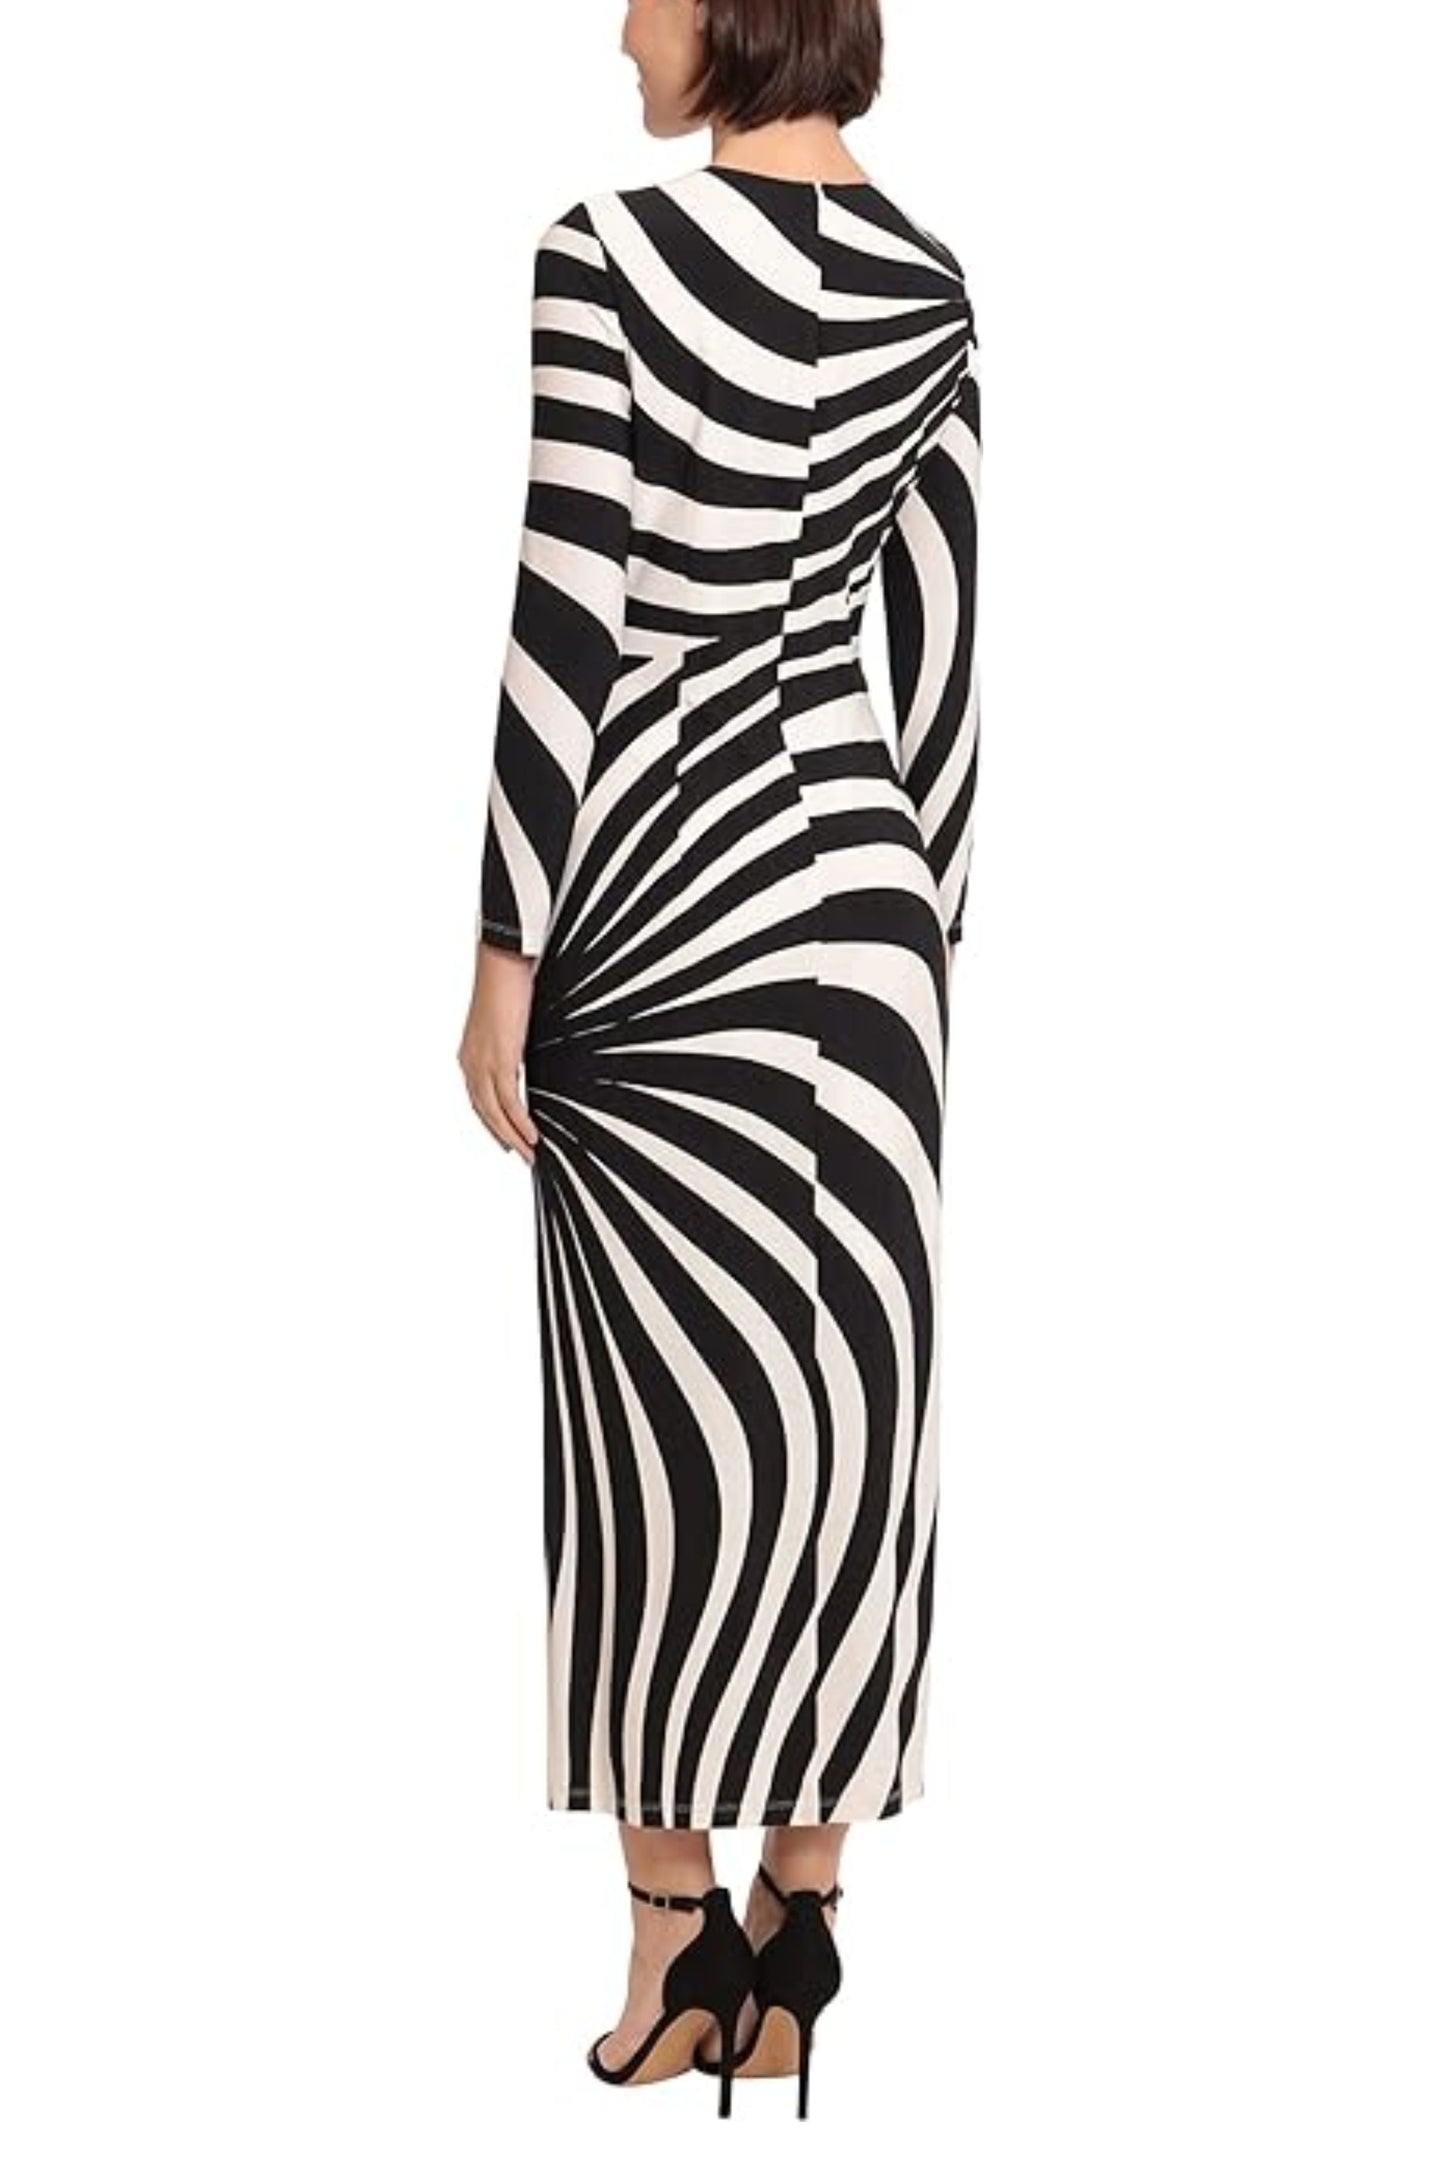 Donna Morgan Abstract Stripe Long Sleeve Dress